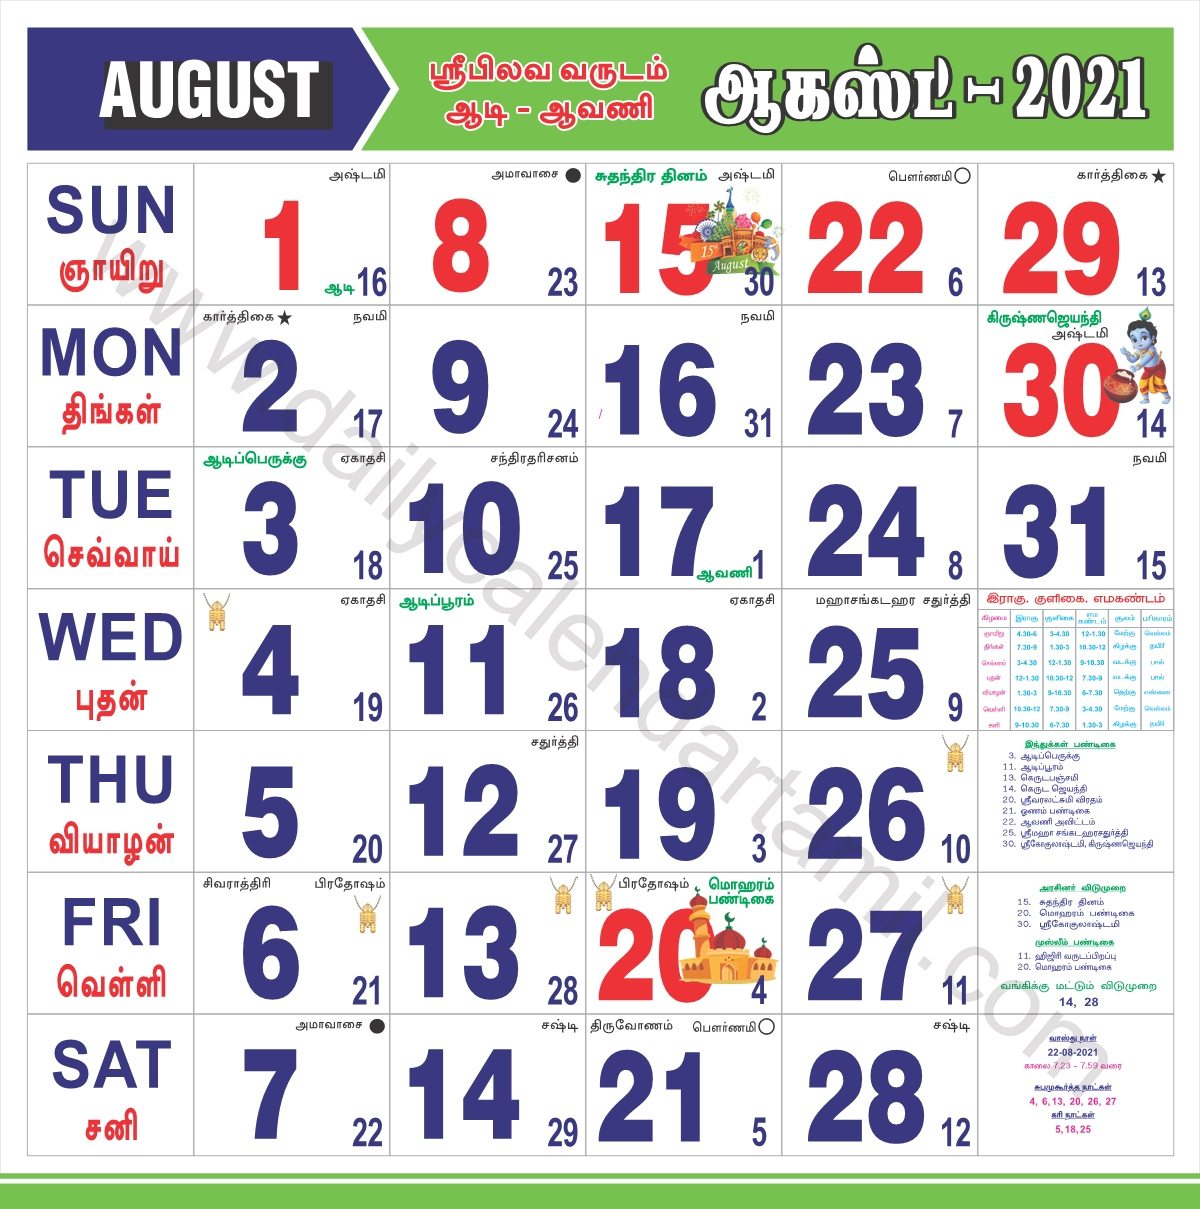 August 2021 Tamil Calendar Muhurtham - Bmp-Minkus Tamil Calendar 2021 December